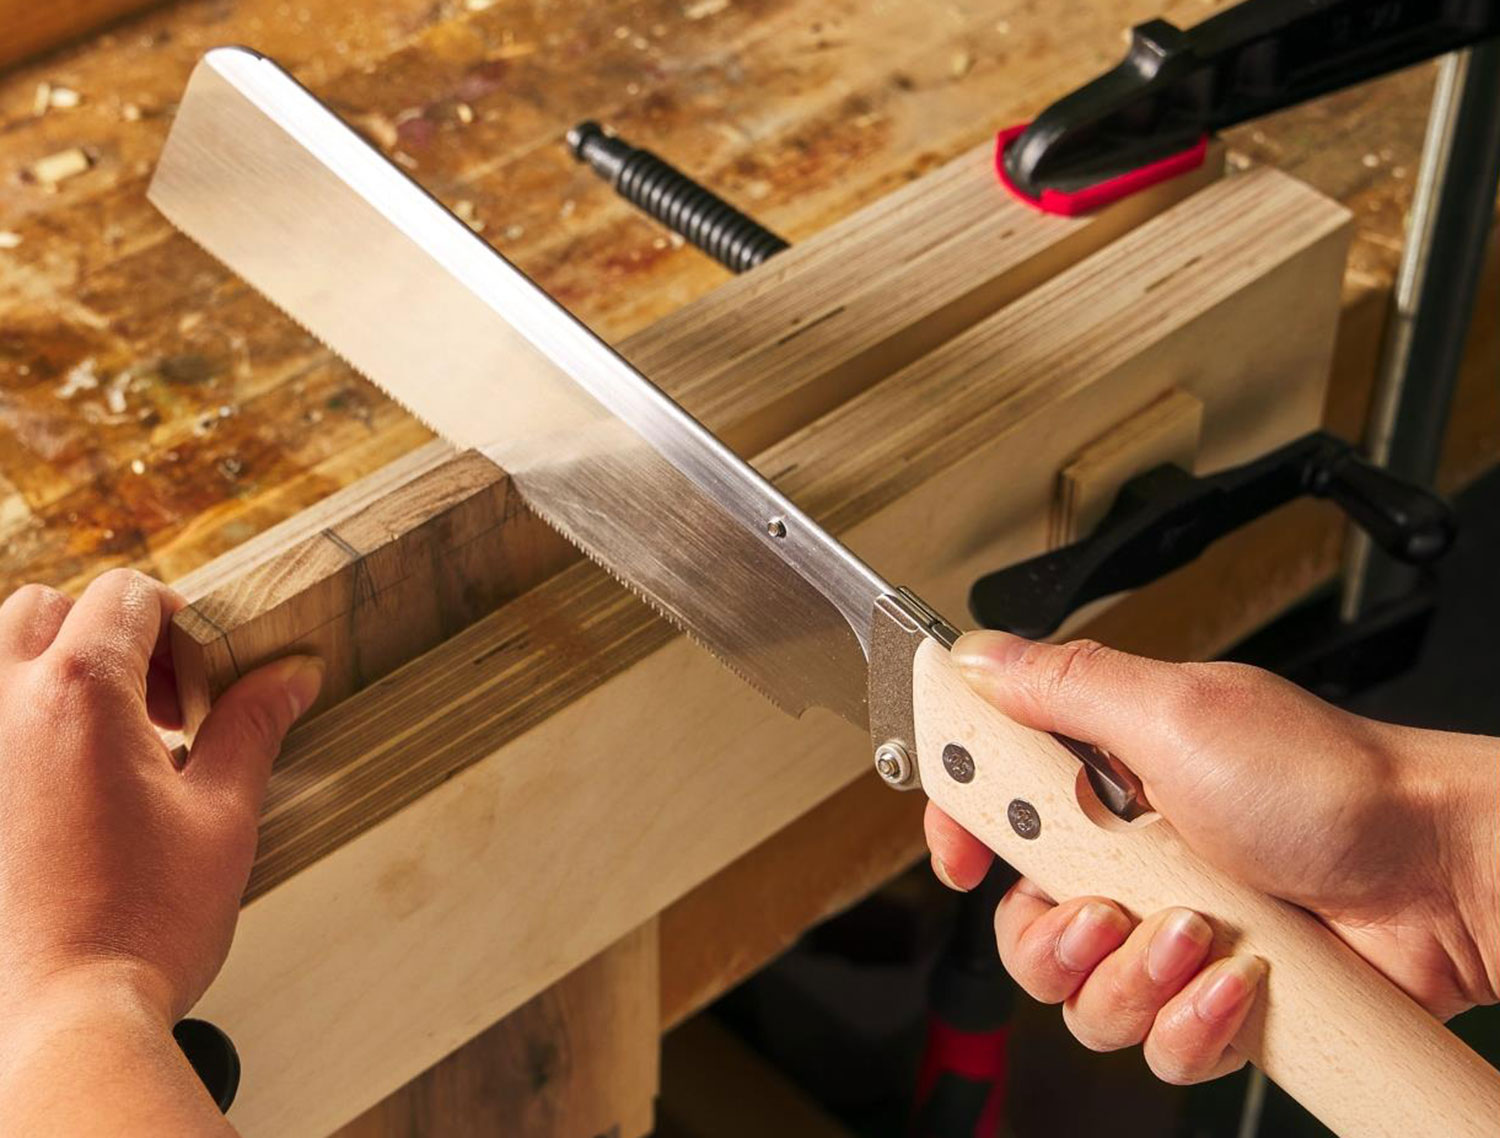 Cutting a dovetail joint using a folding dozuki saw.